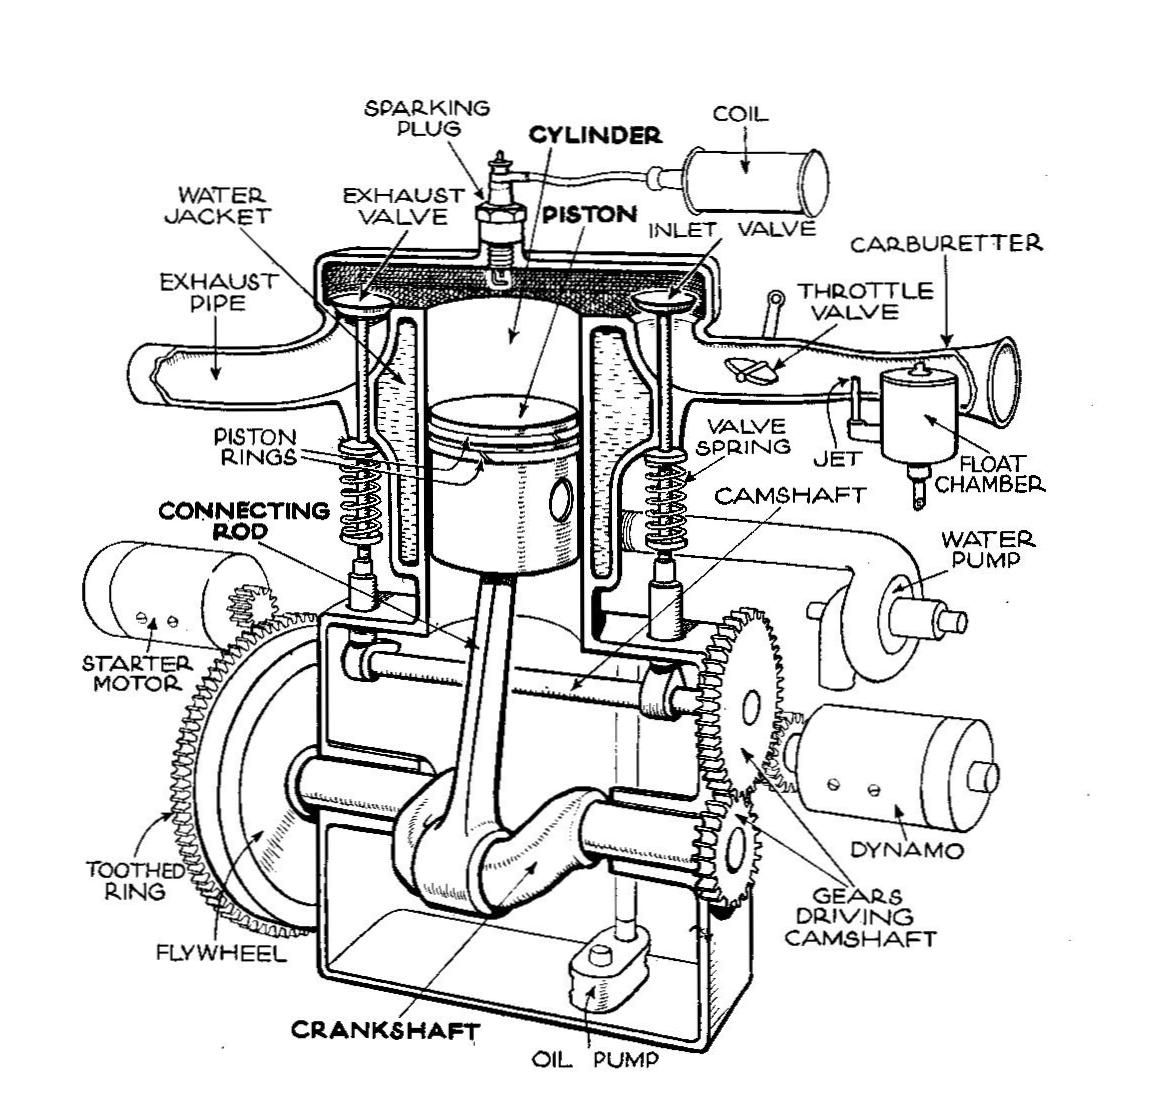 Single Cylinder engine line drawing